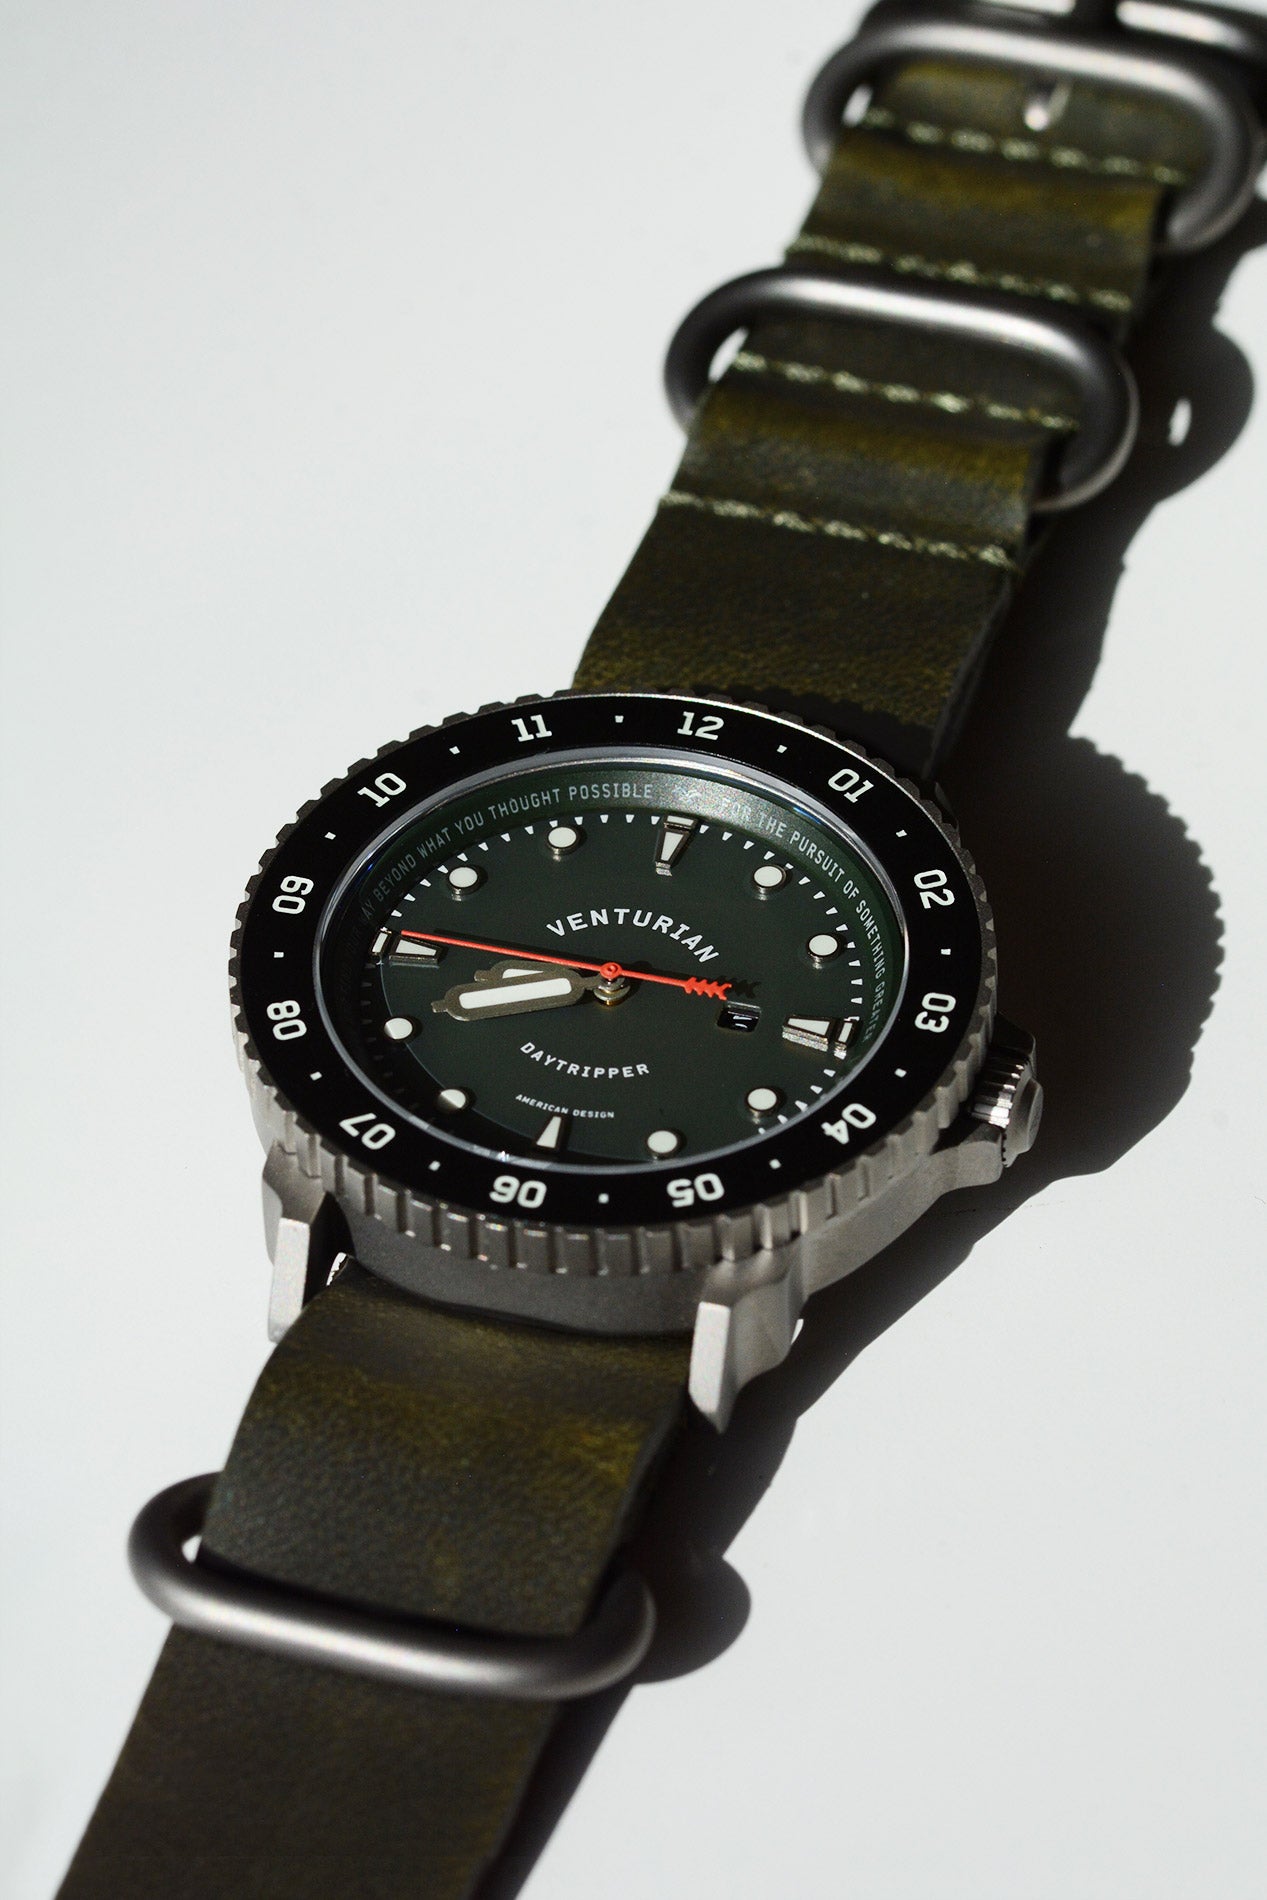 Venturian WatchWorks Daytripper mens watch — 38mm dual timer bezel — black dial. 